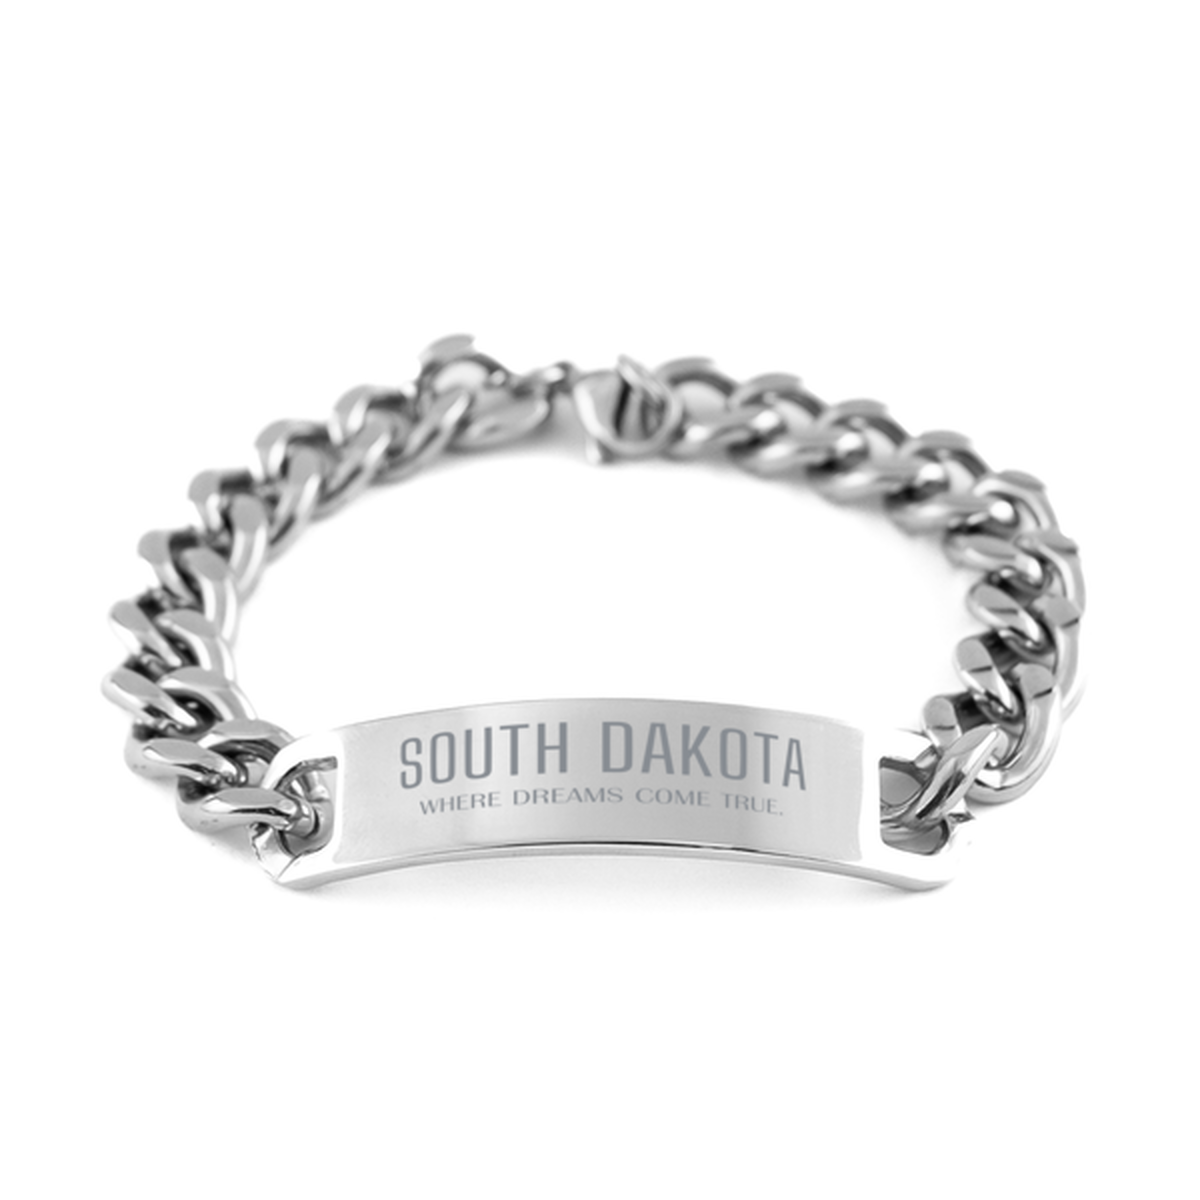 Love South Dakota State Cuban Chain Stainless Steel Bracelet, South Dakota Where dreams come true, Birthday Inspirational Gifts For South Dakota Men, Women, Friends